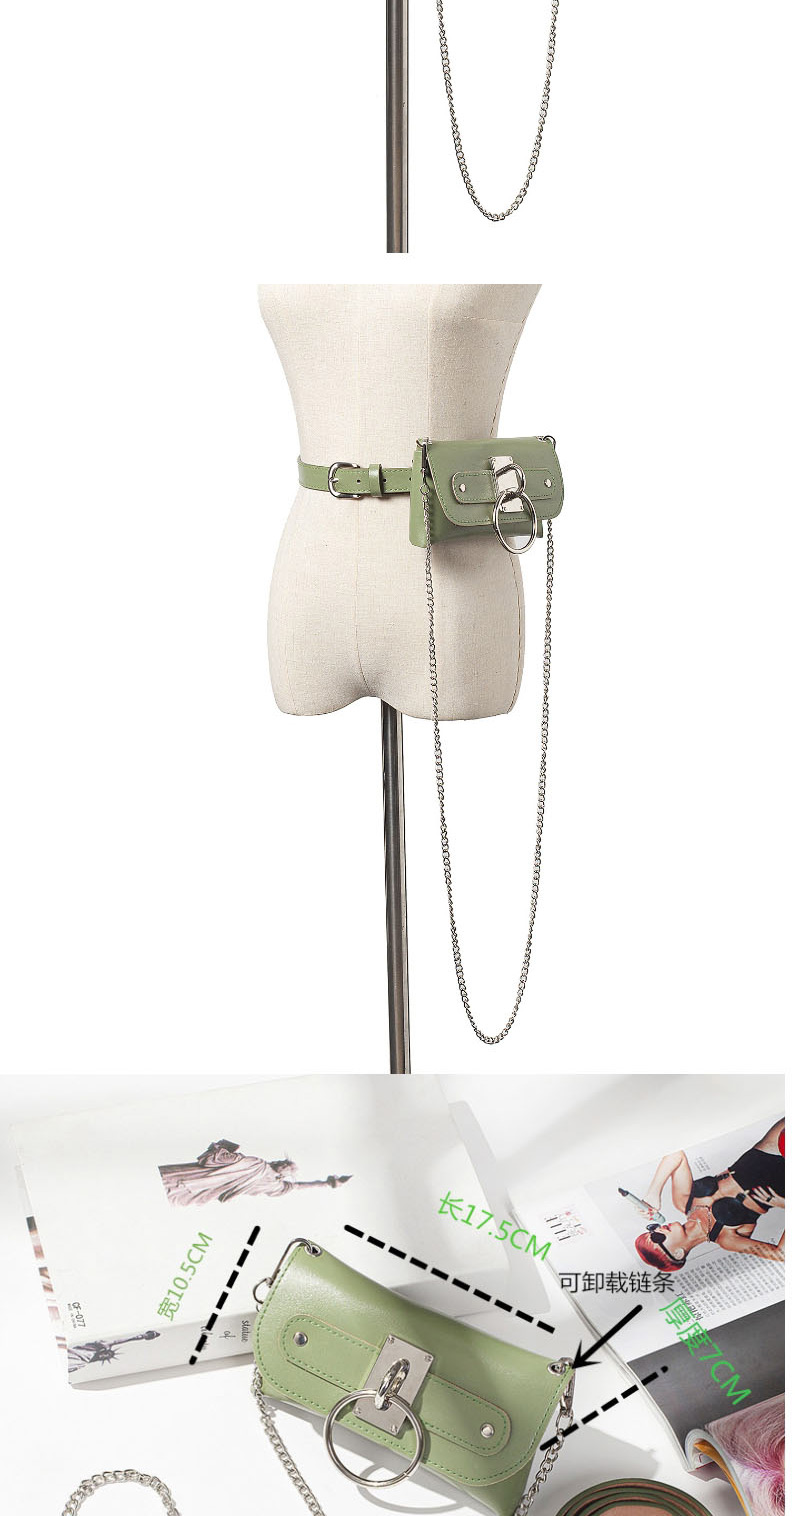 Fashion Black Detachable Chain Large Loop Messenger Belt Belt Bag,Thin belts